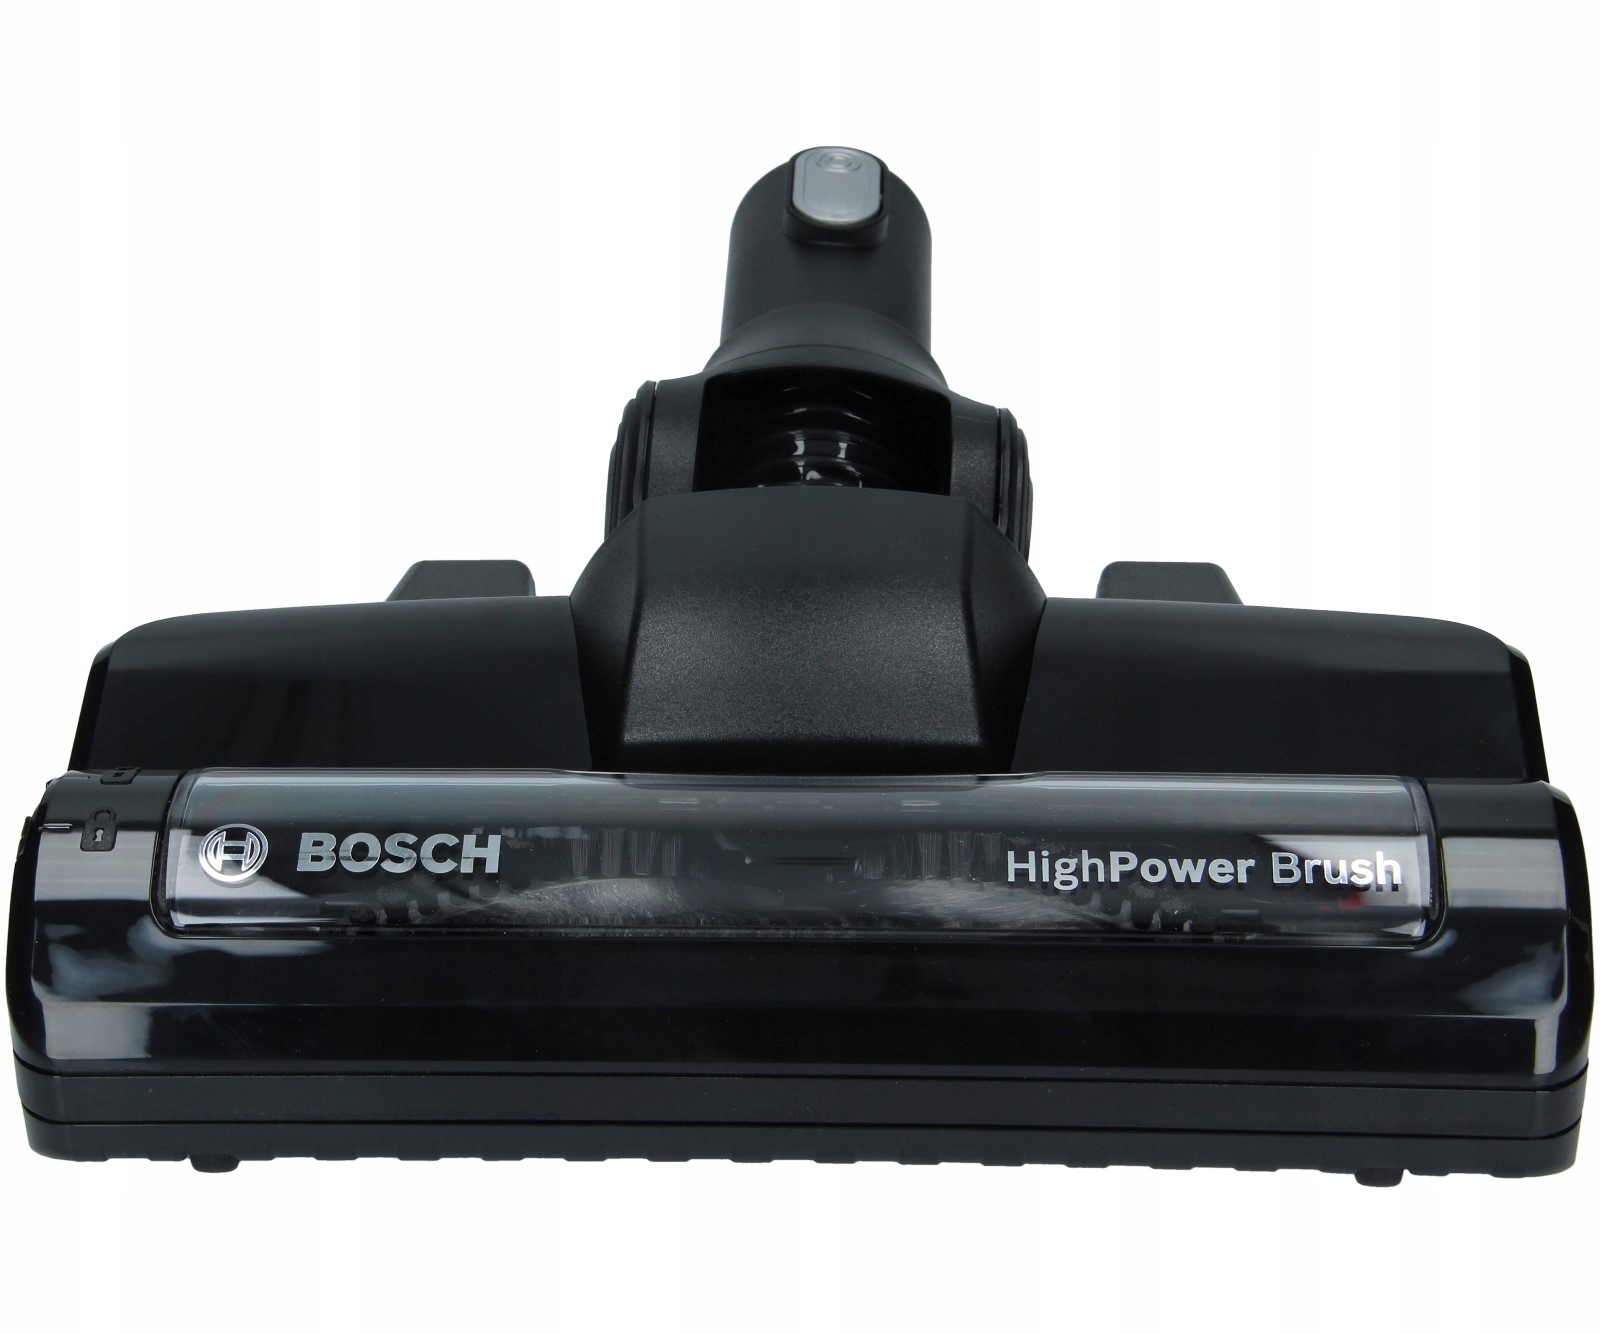 

Elektroszczotka HighPower Brush 17002491 Bosch